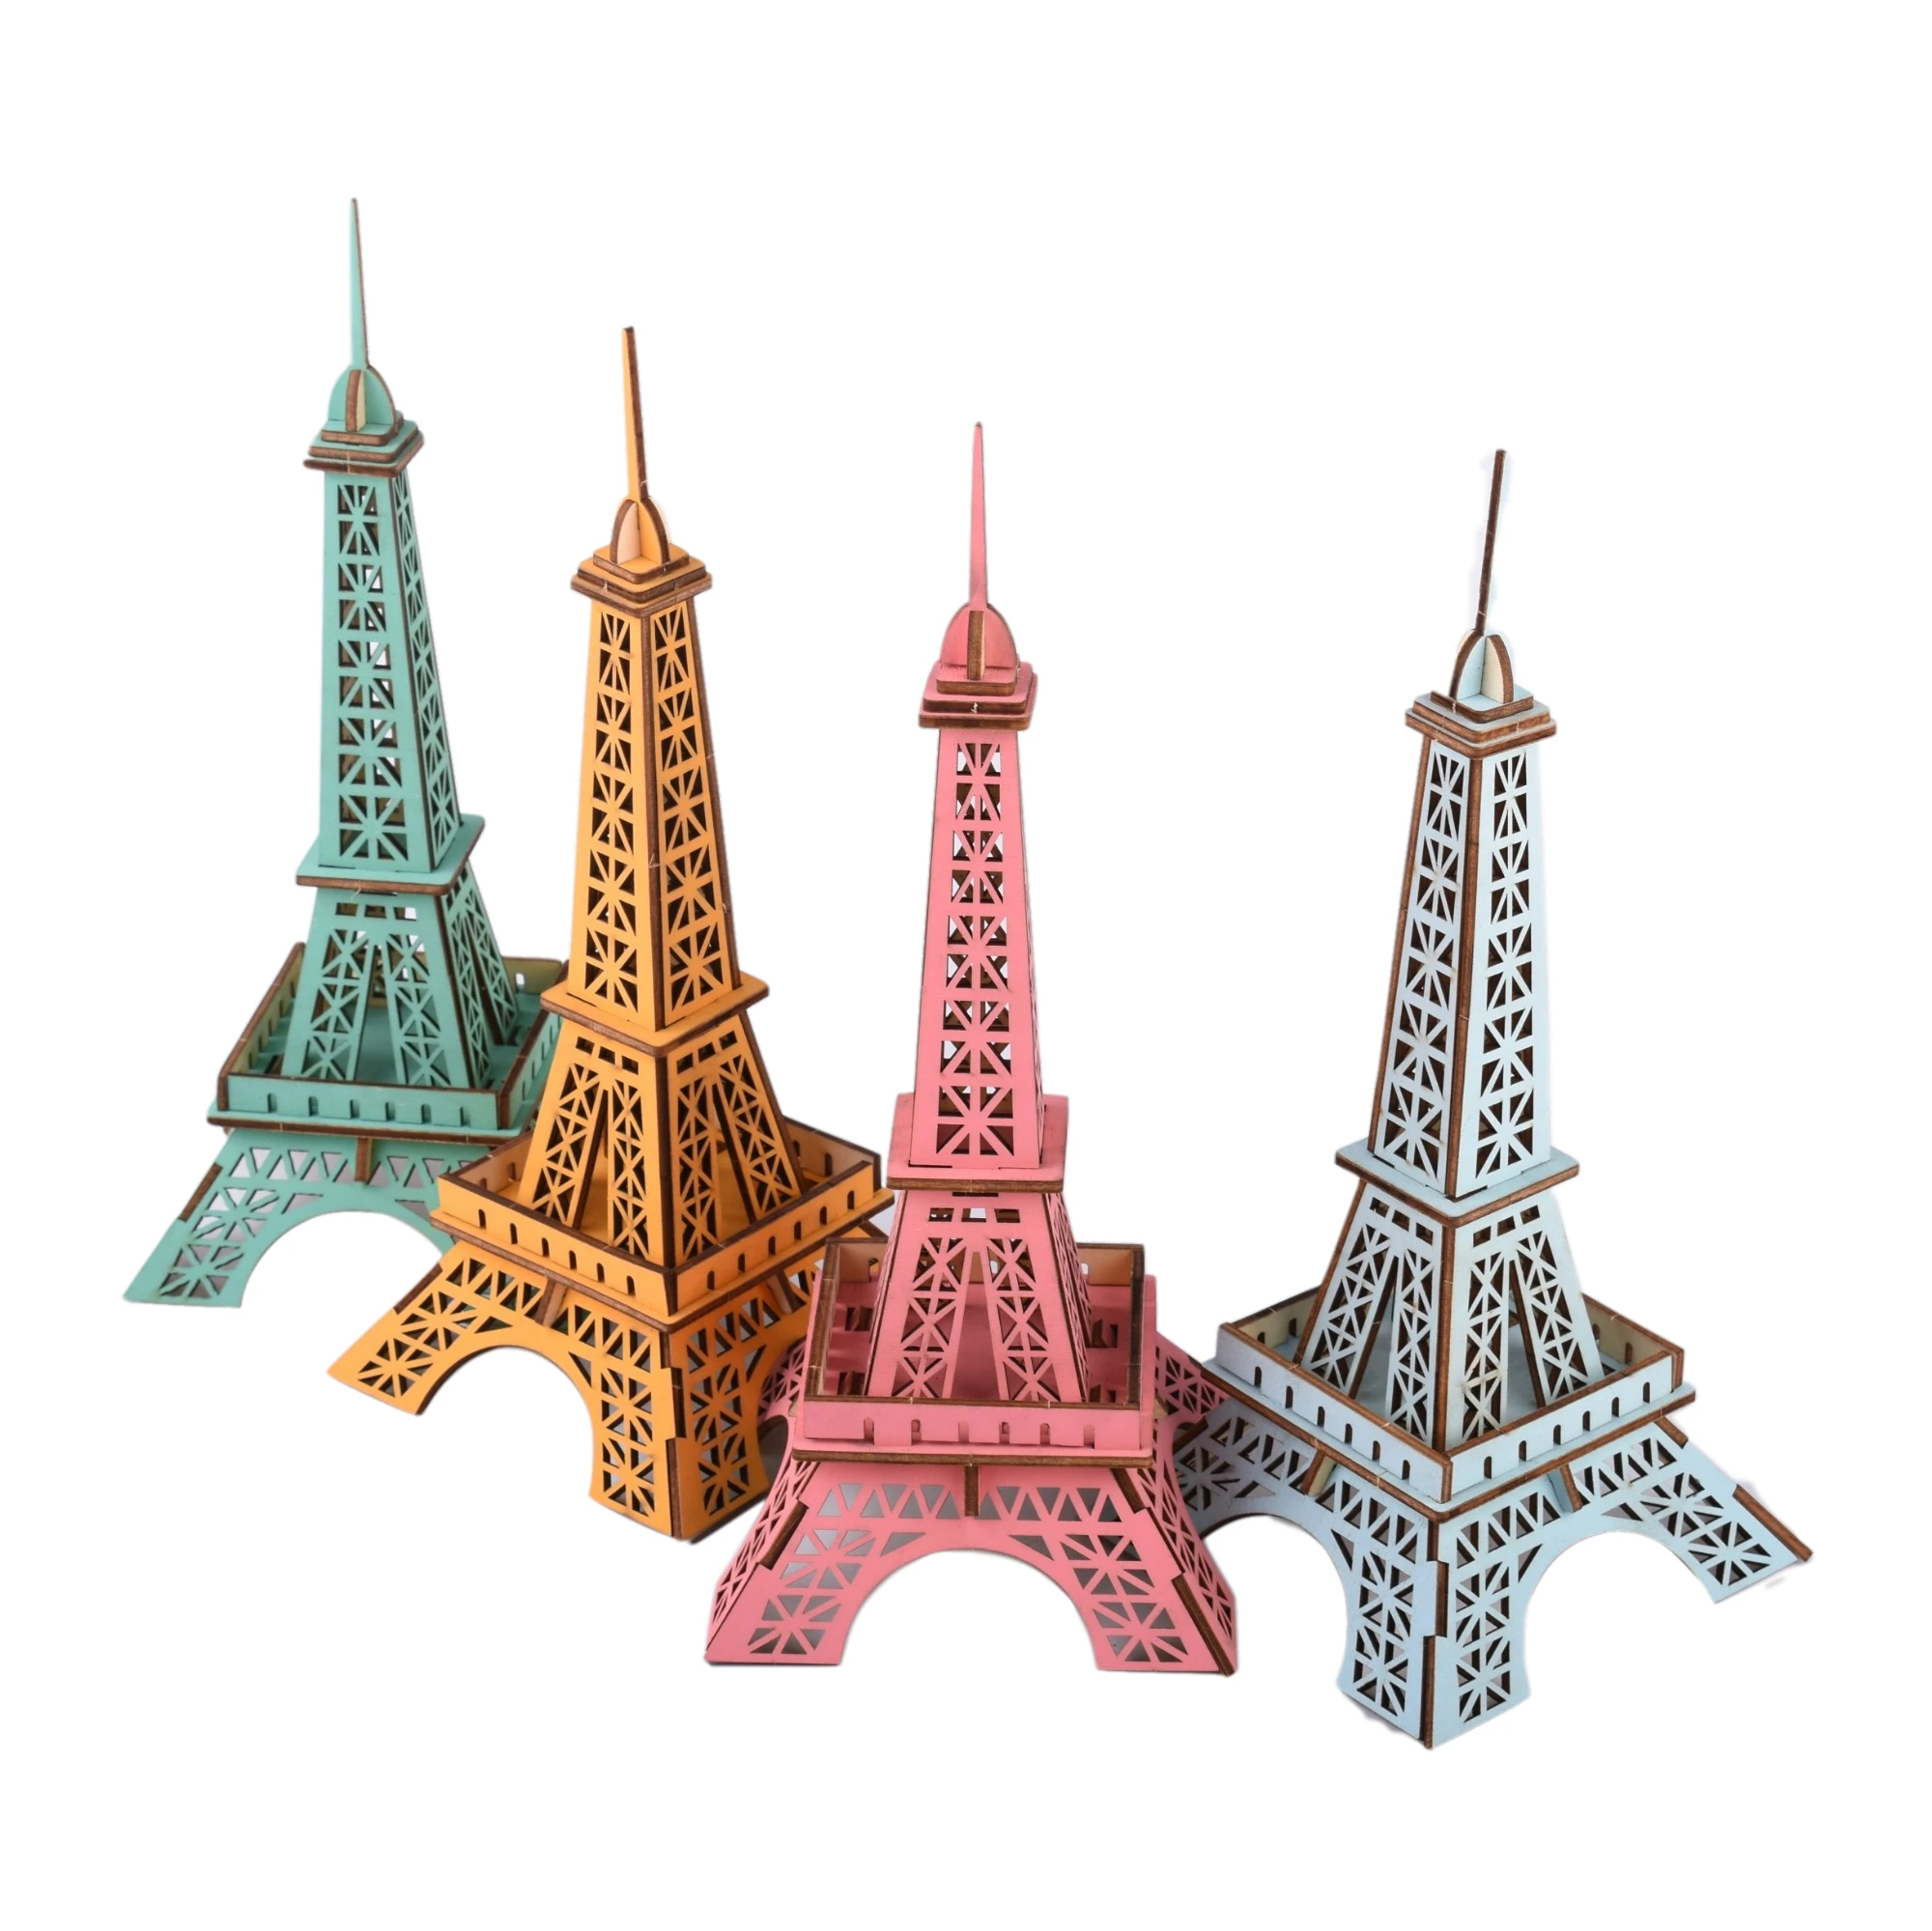 

3d Puzzle Wooden Toys Jigsaw Brinquedos DIY Laser Cut Paris Eiffel Tower 4 Colors Model kids Education Wood Toys For Children